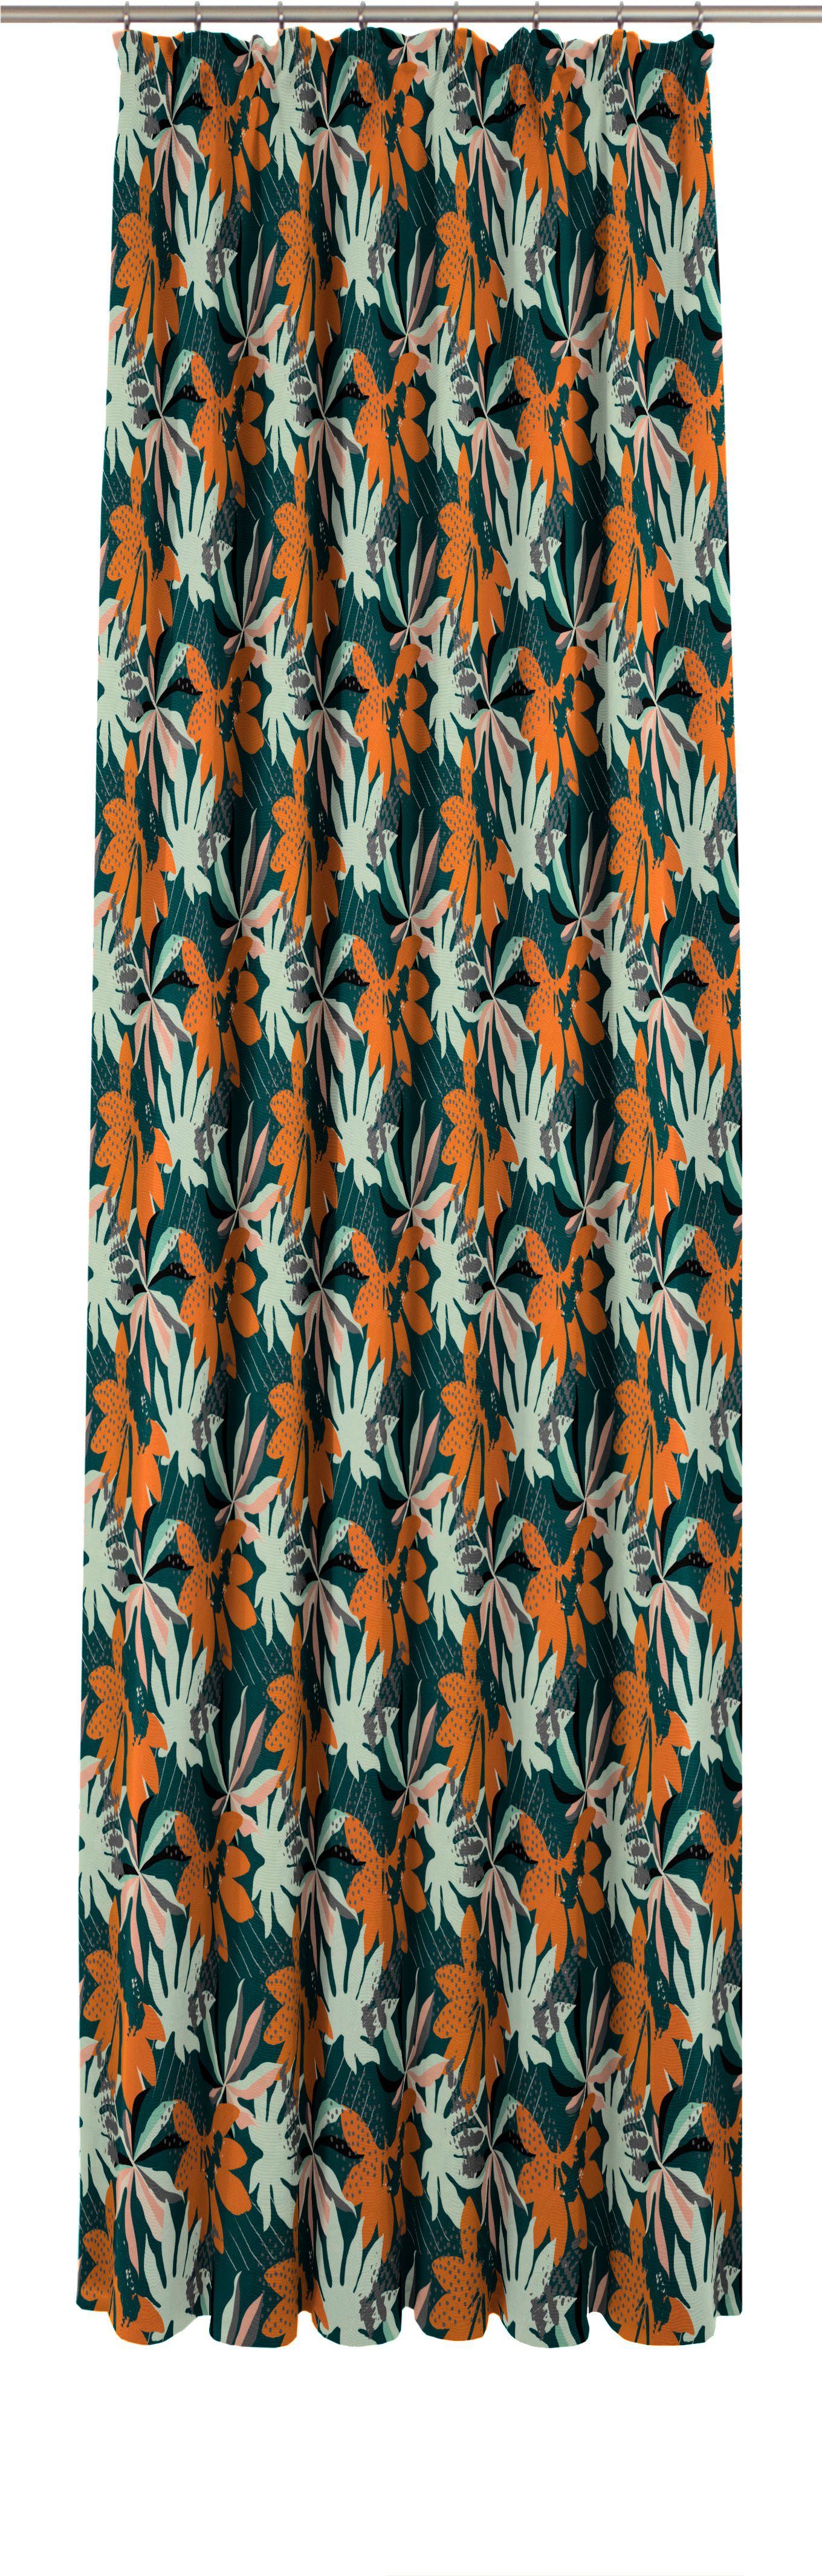 Kräuselband nachhaltig Jacquard, Adam, orange/dunkelgrün (1 St), Vorhang blickdicht, Jungle,